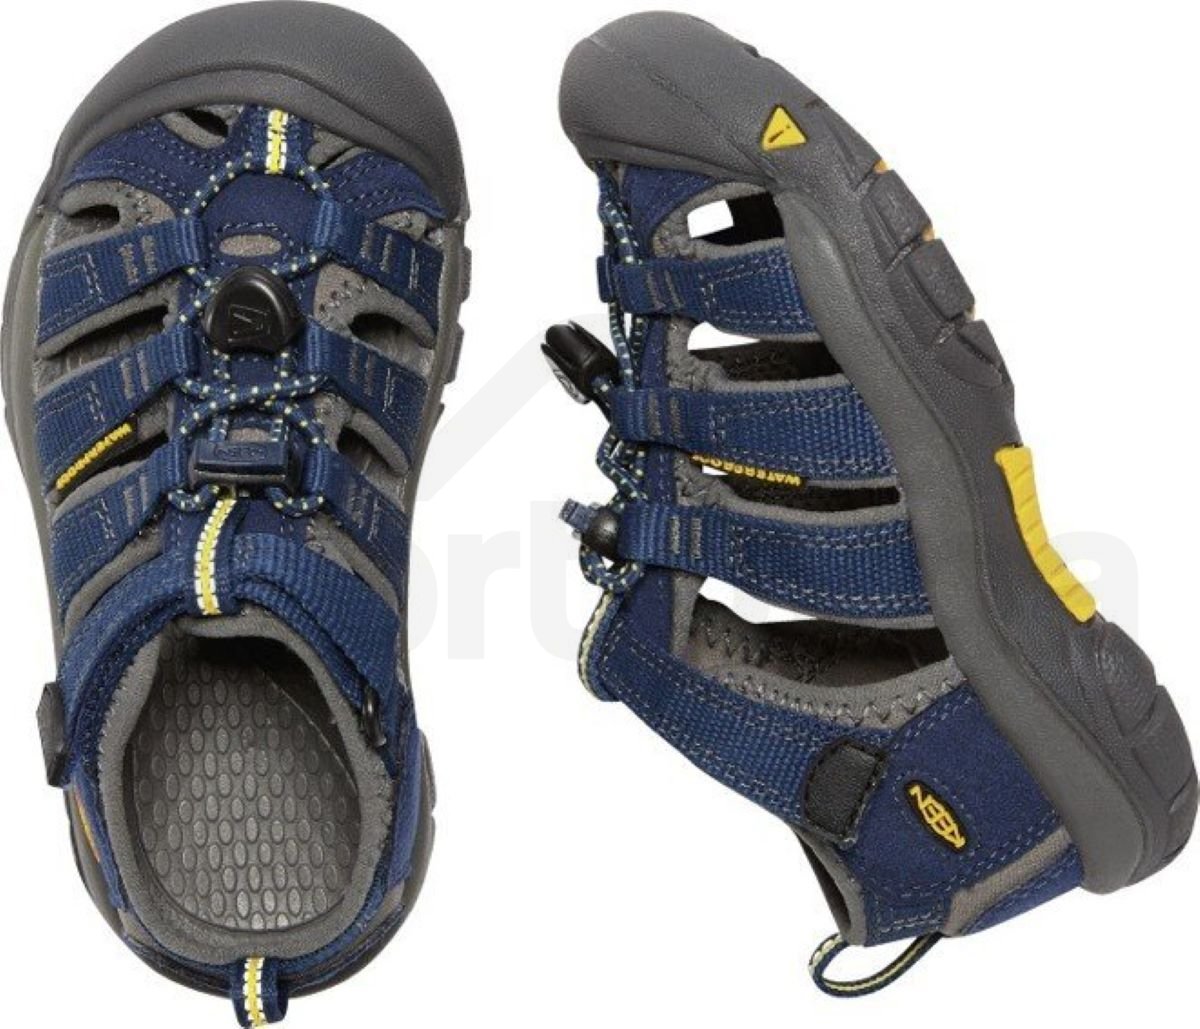 Obuv - sandály Keen Newport H2 K - tmavě modrá